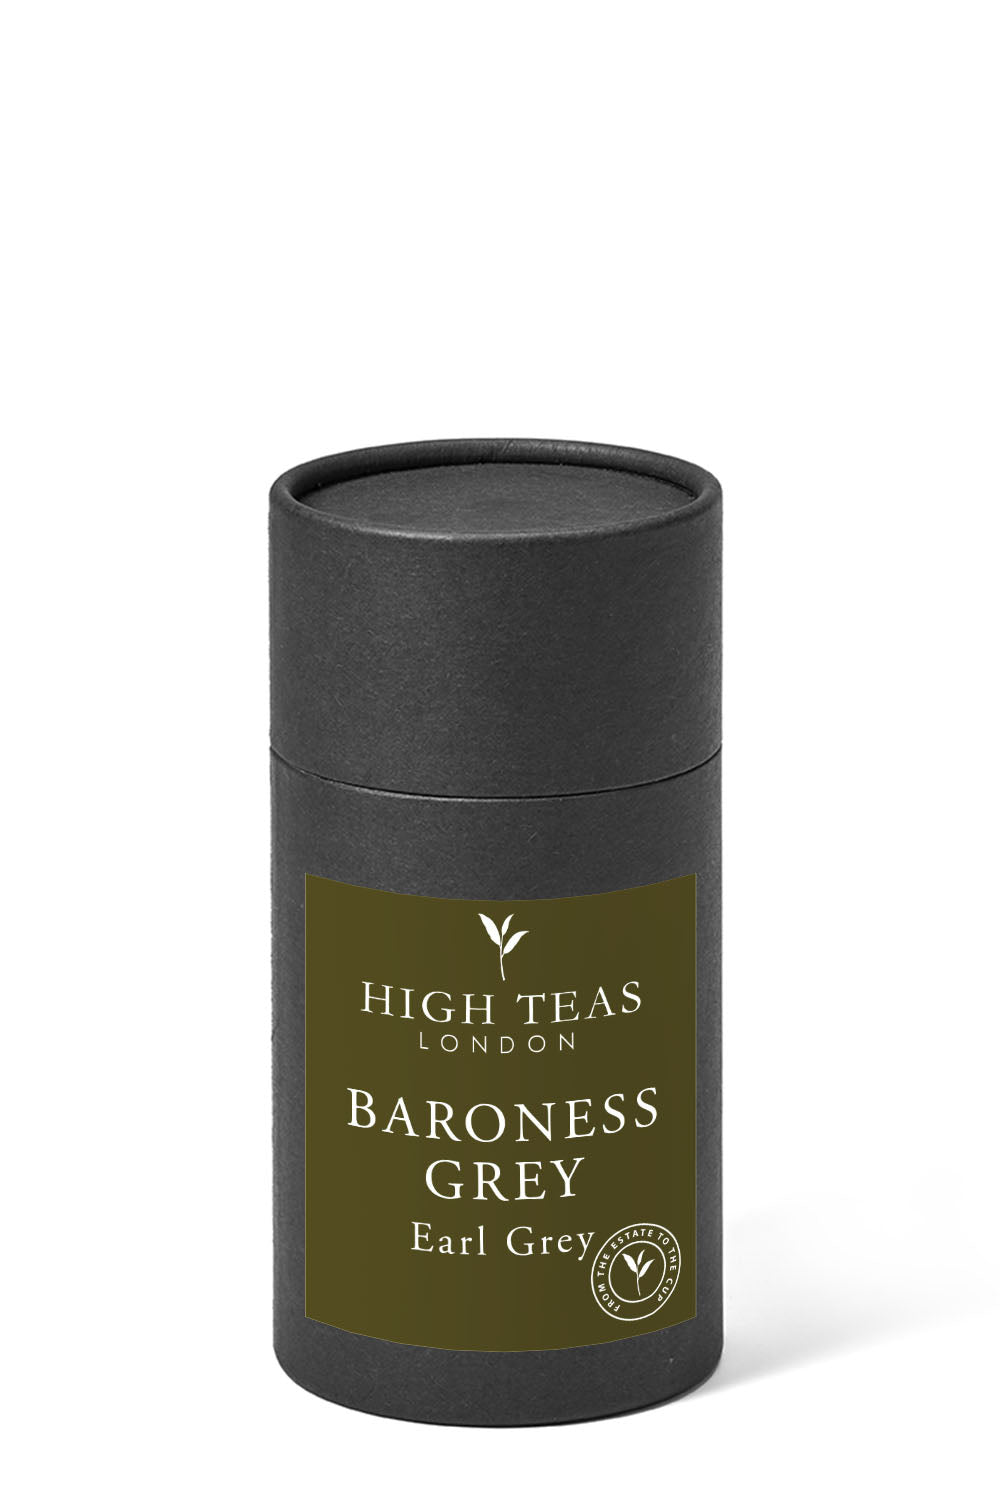 Baroness Grey Blend-60g gift-Loose Leaf Tea-High Teas